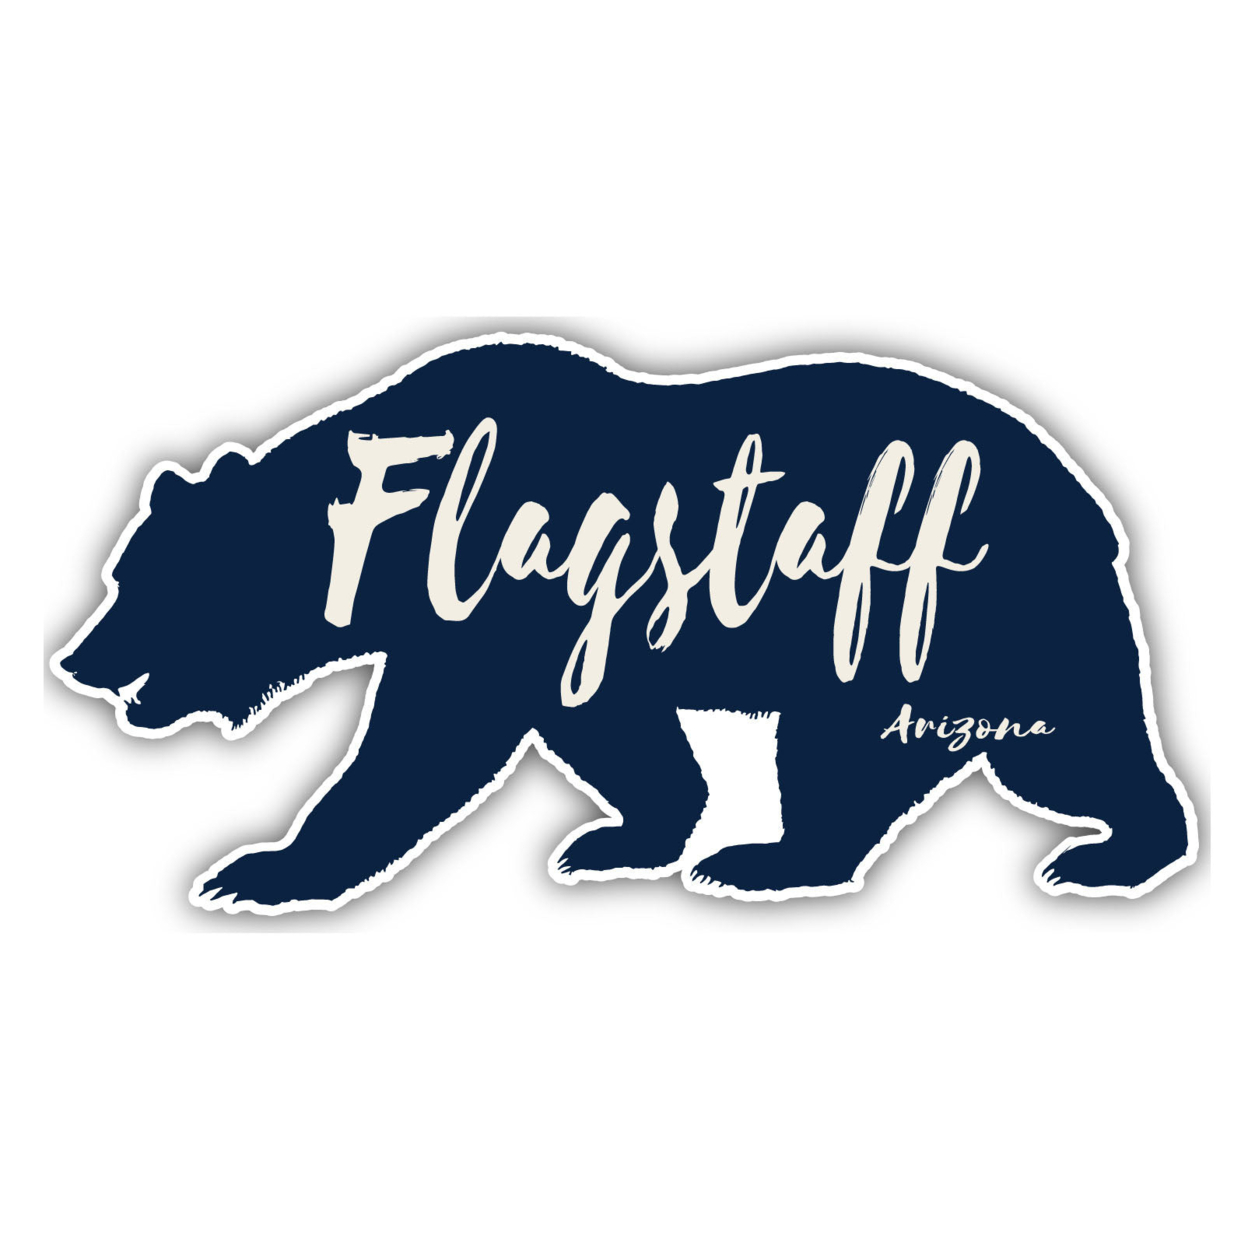 Flagstaff Arizona Souvenir Decorative Stickers (Choose Theme And Size) - 4-Pack, 6-Inch, Bear